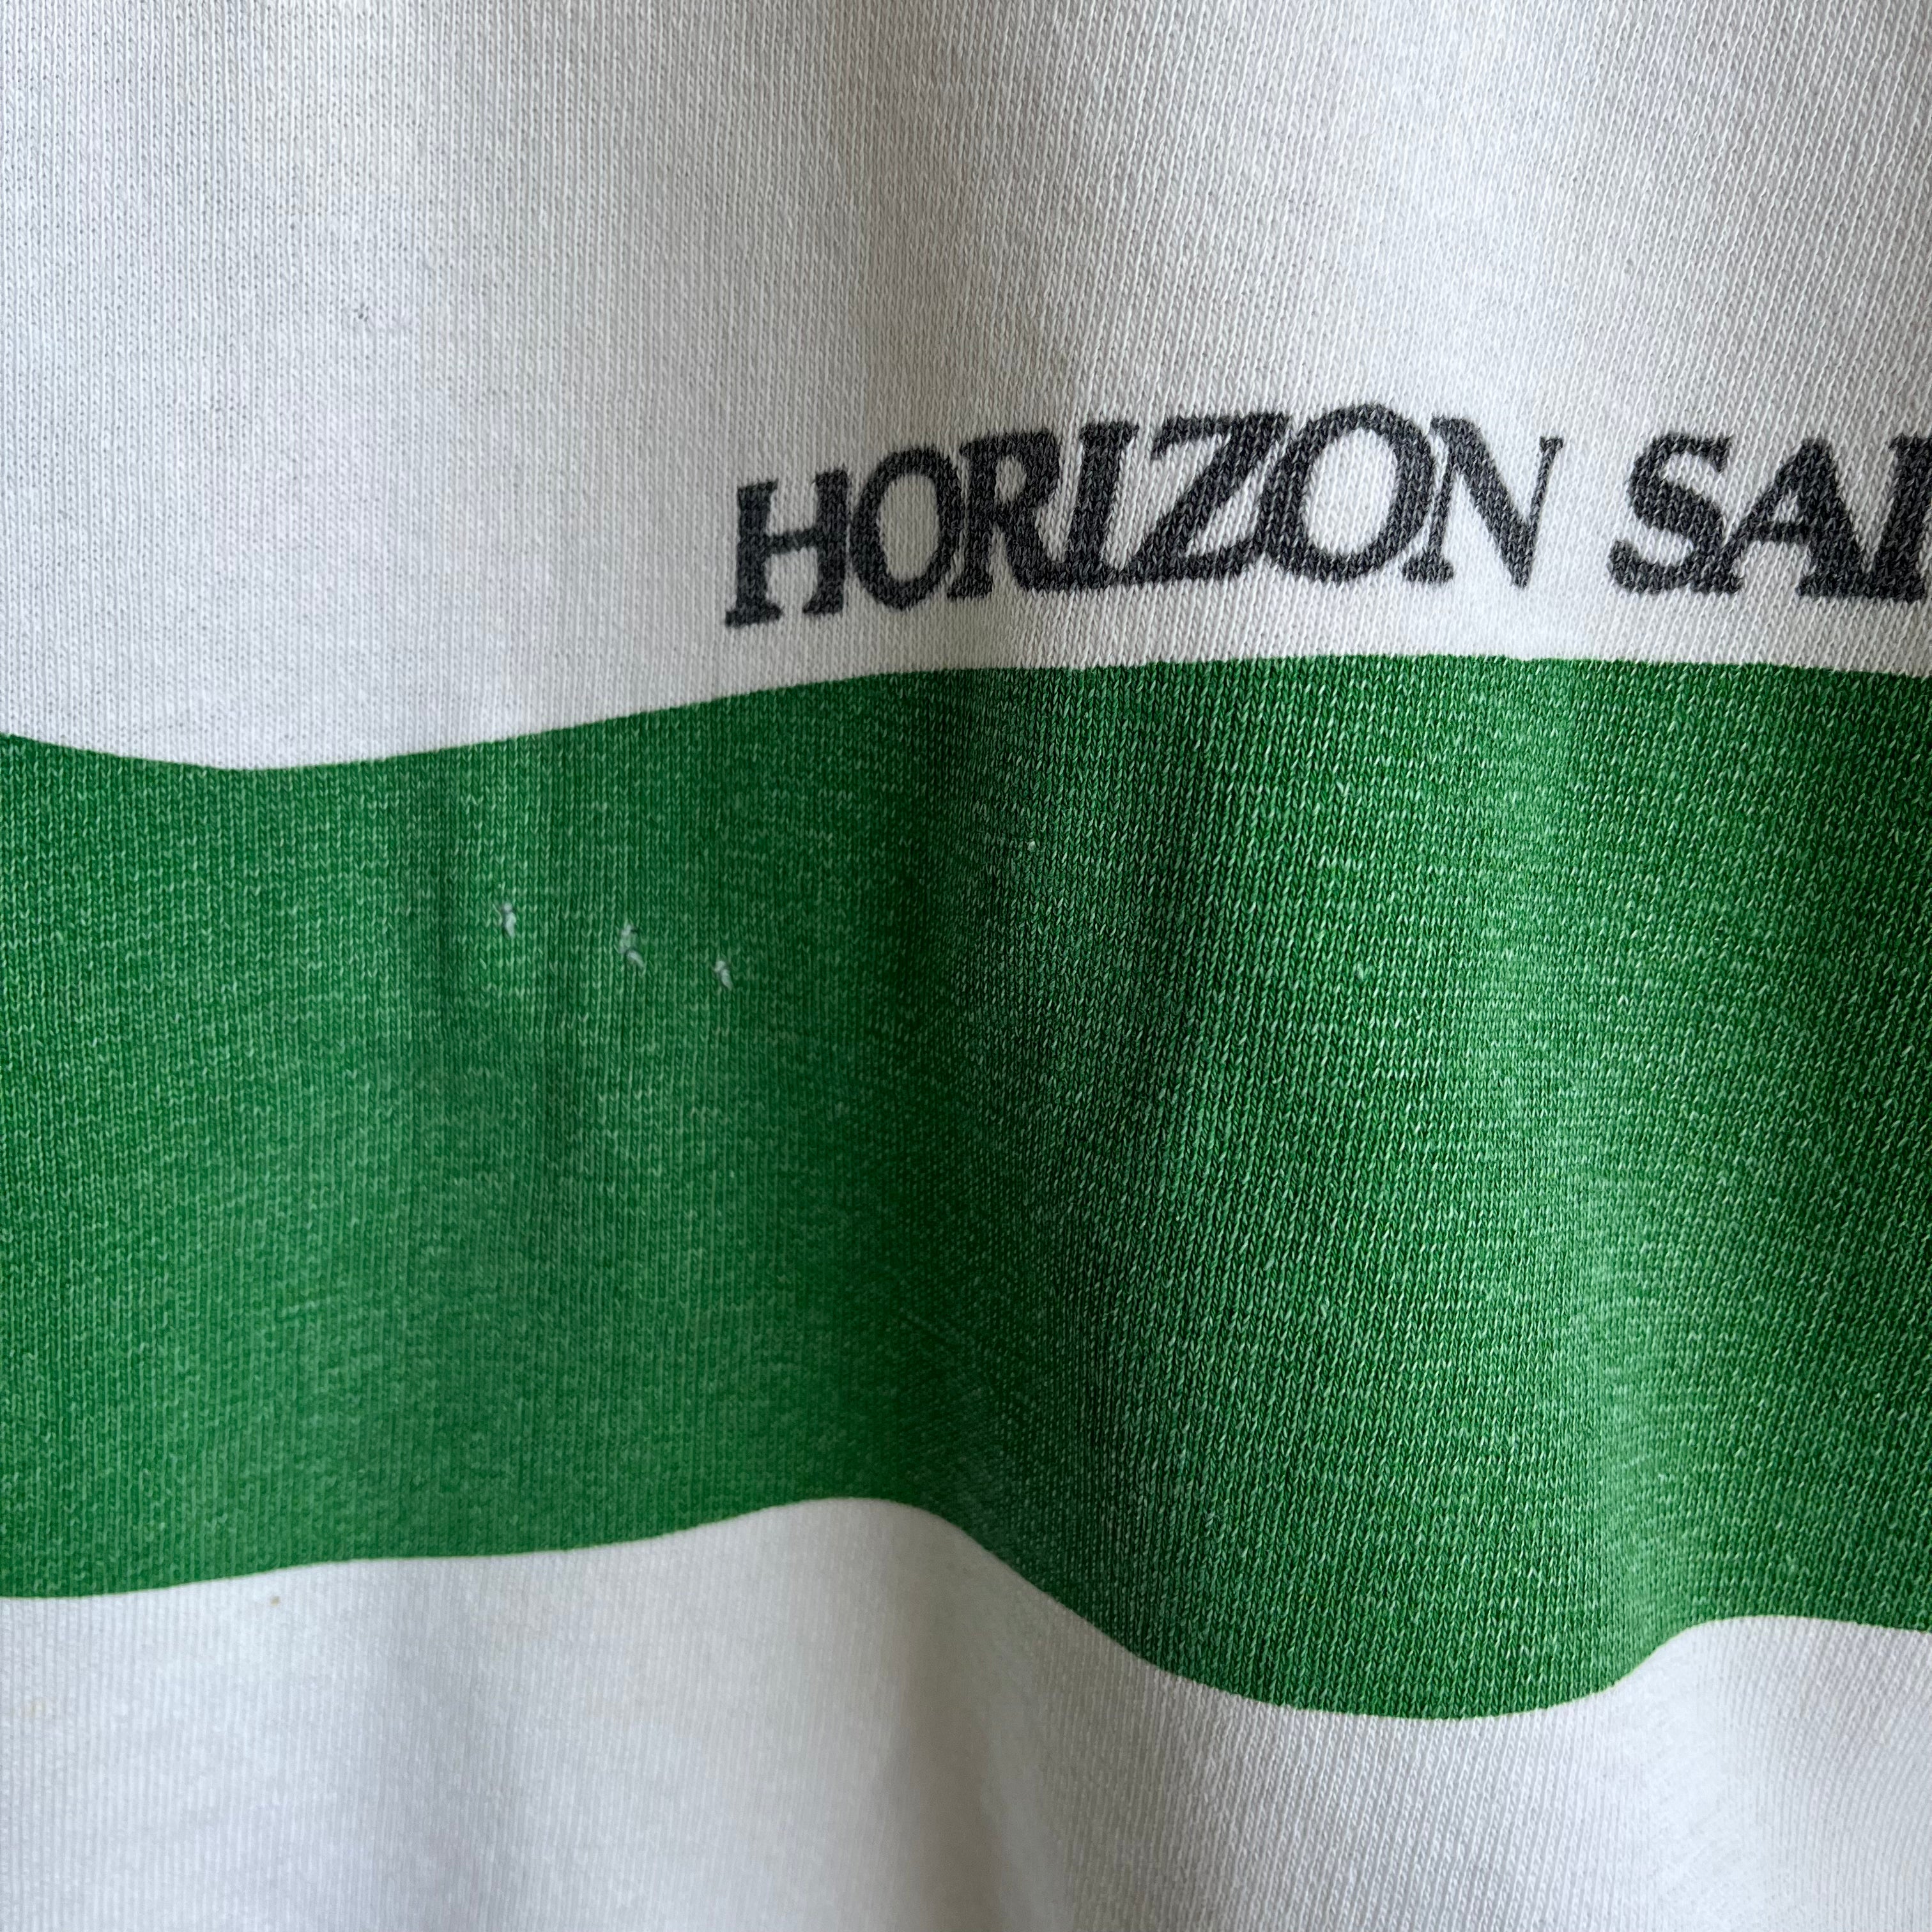 1970s Horizon Sails Wrap Around Sweatshirt by Maverick